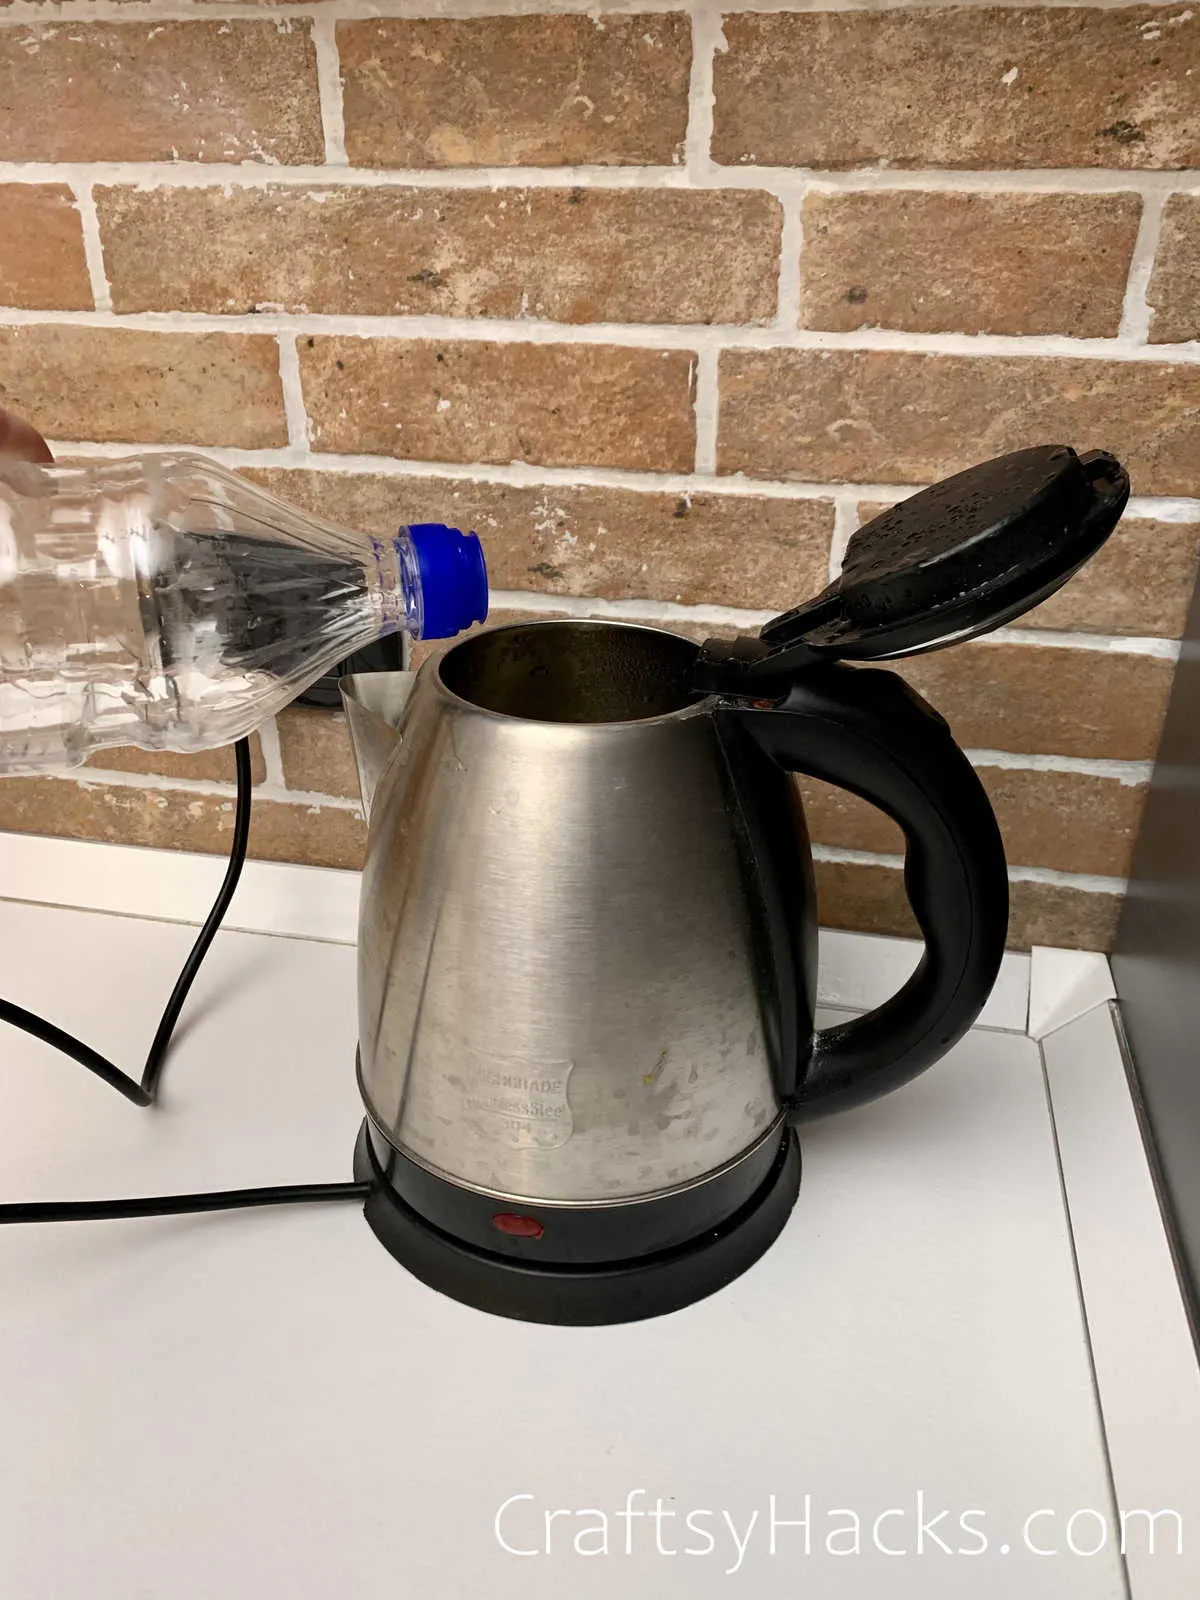 descale kettle with vinegar